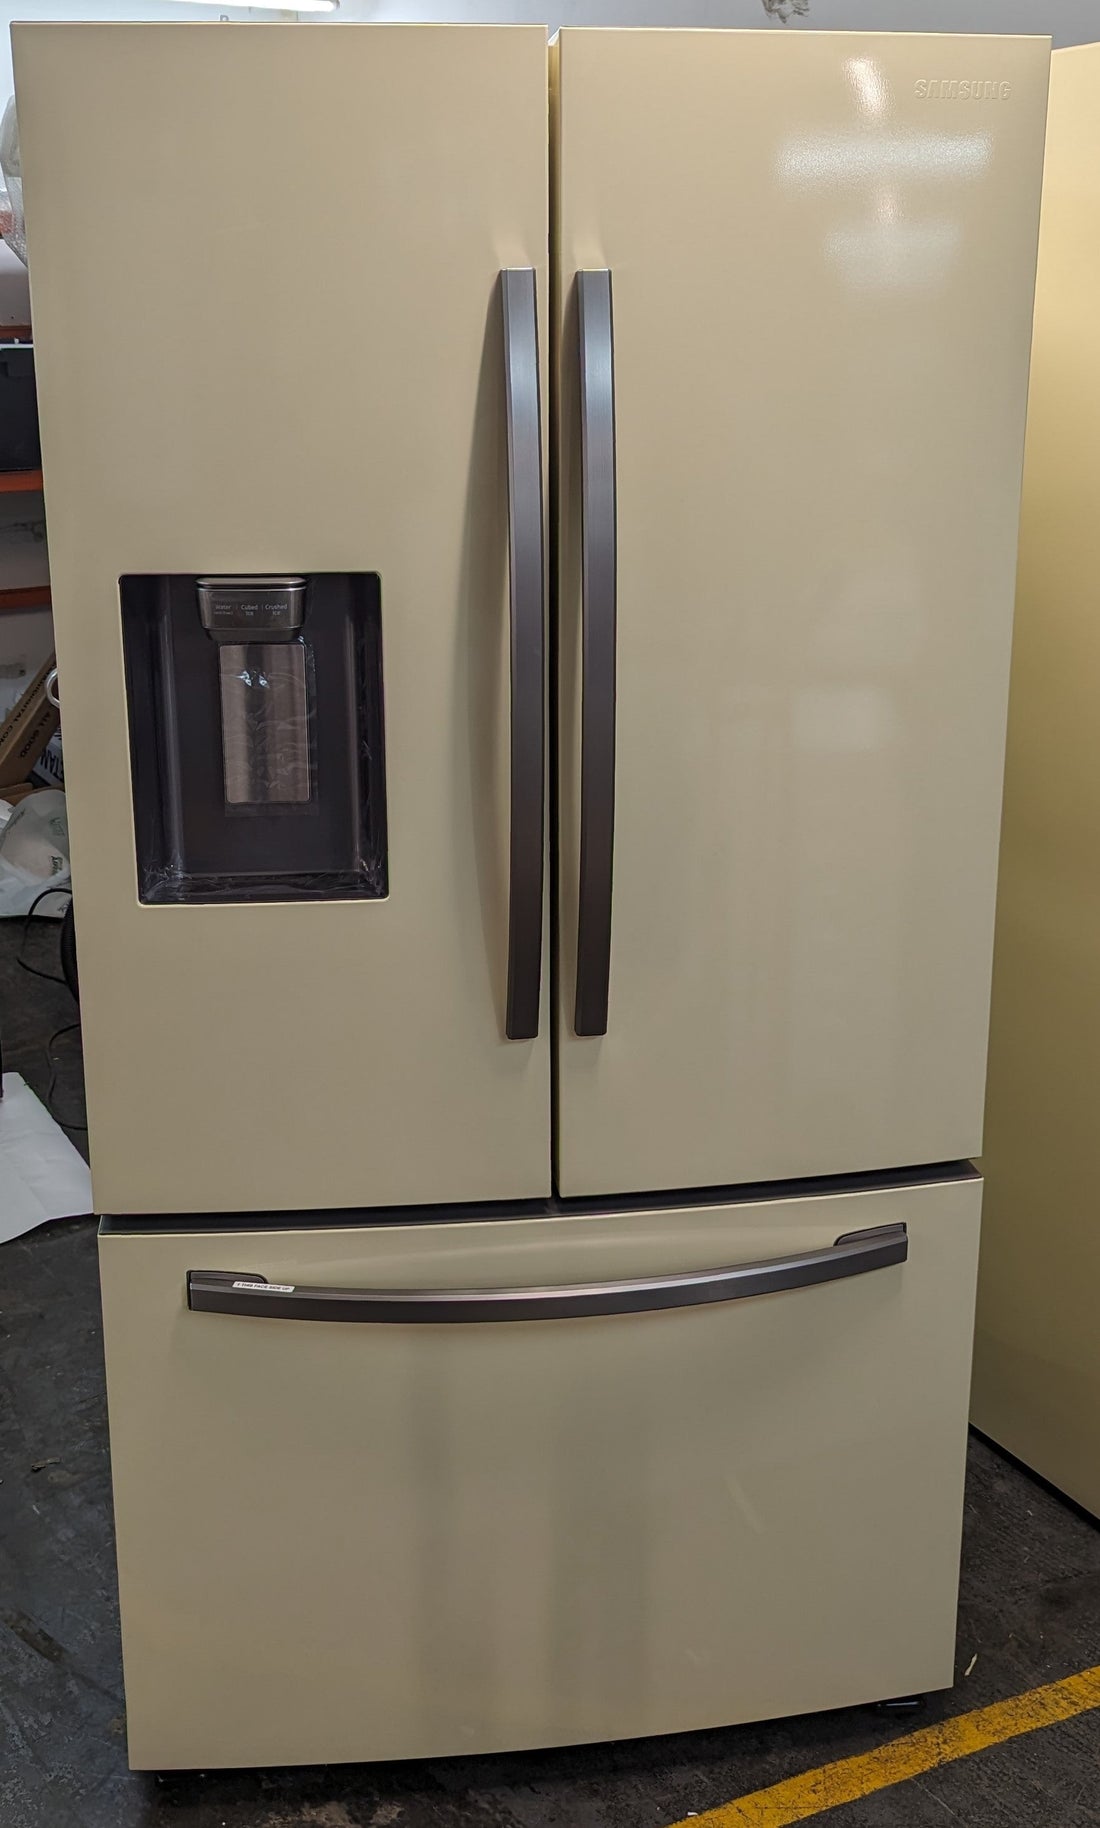 Samsung RF23R62E3SR Fridge Freezer French Door American in Bespoke Cream